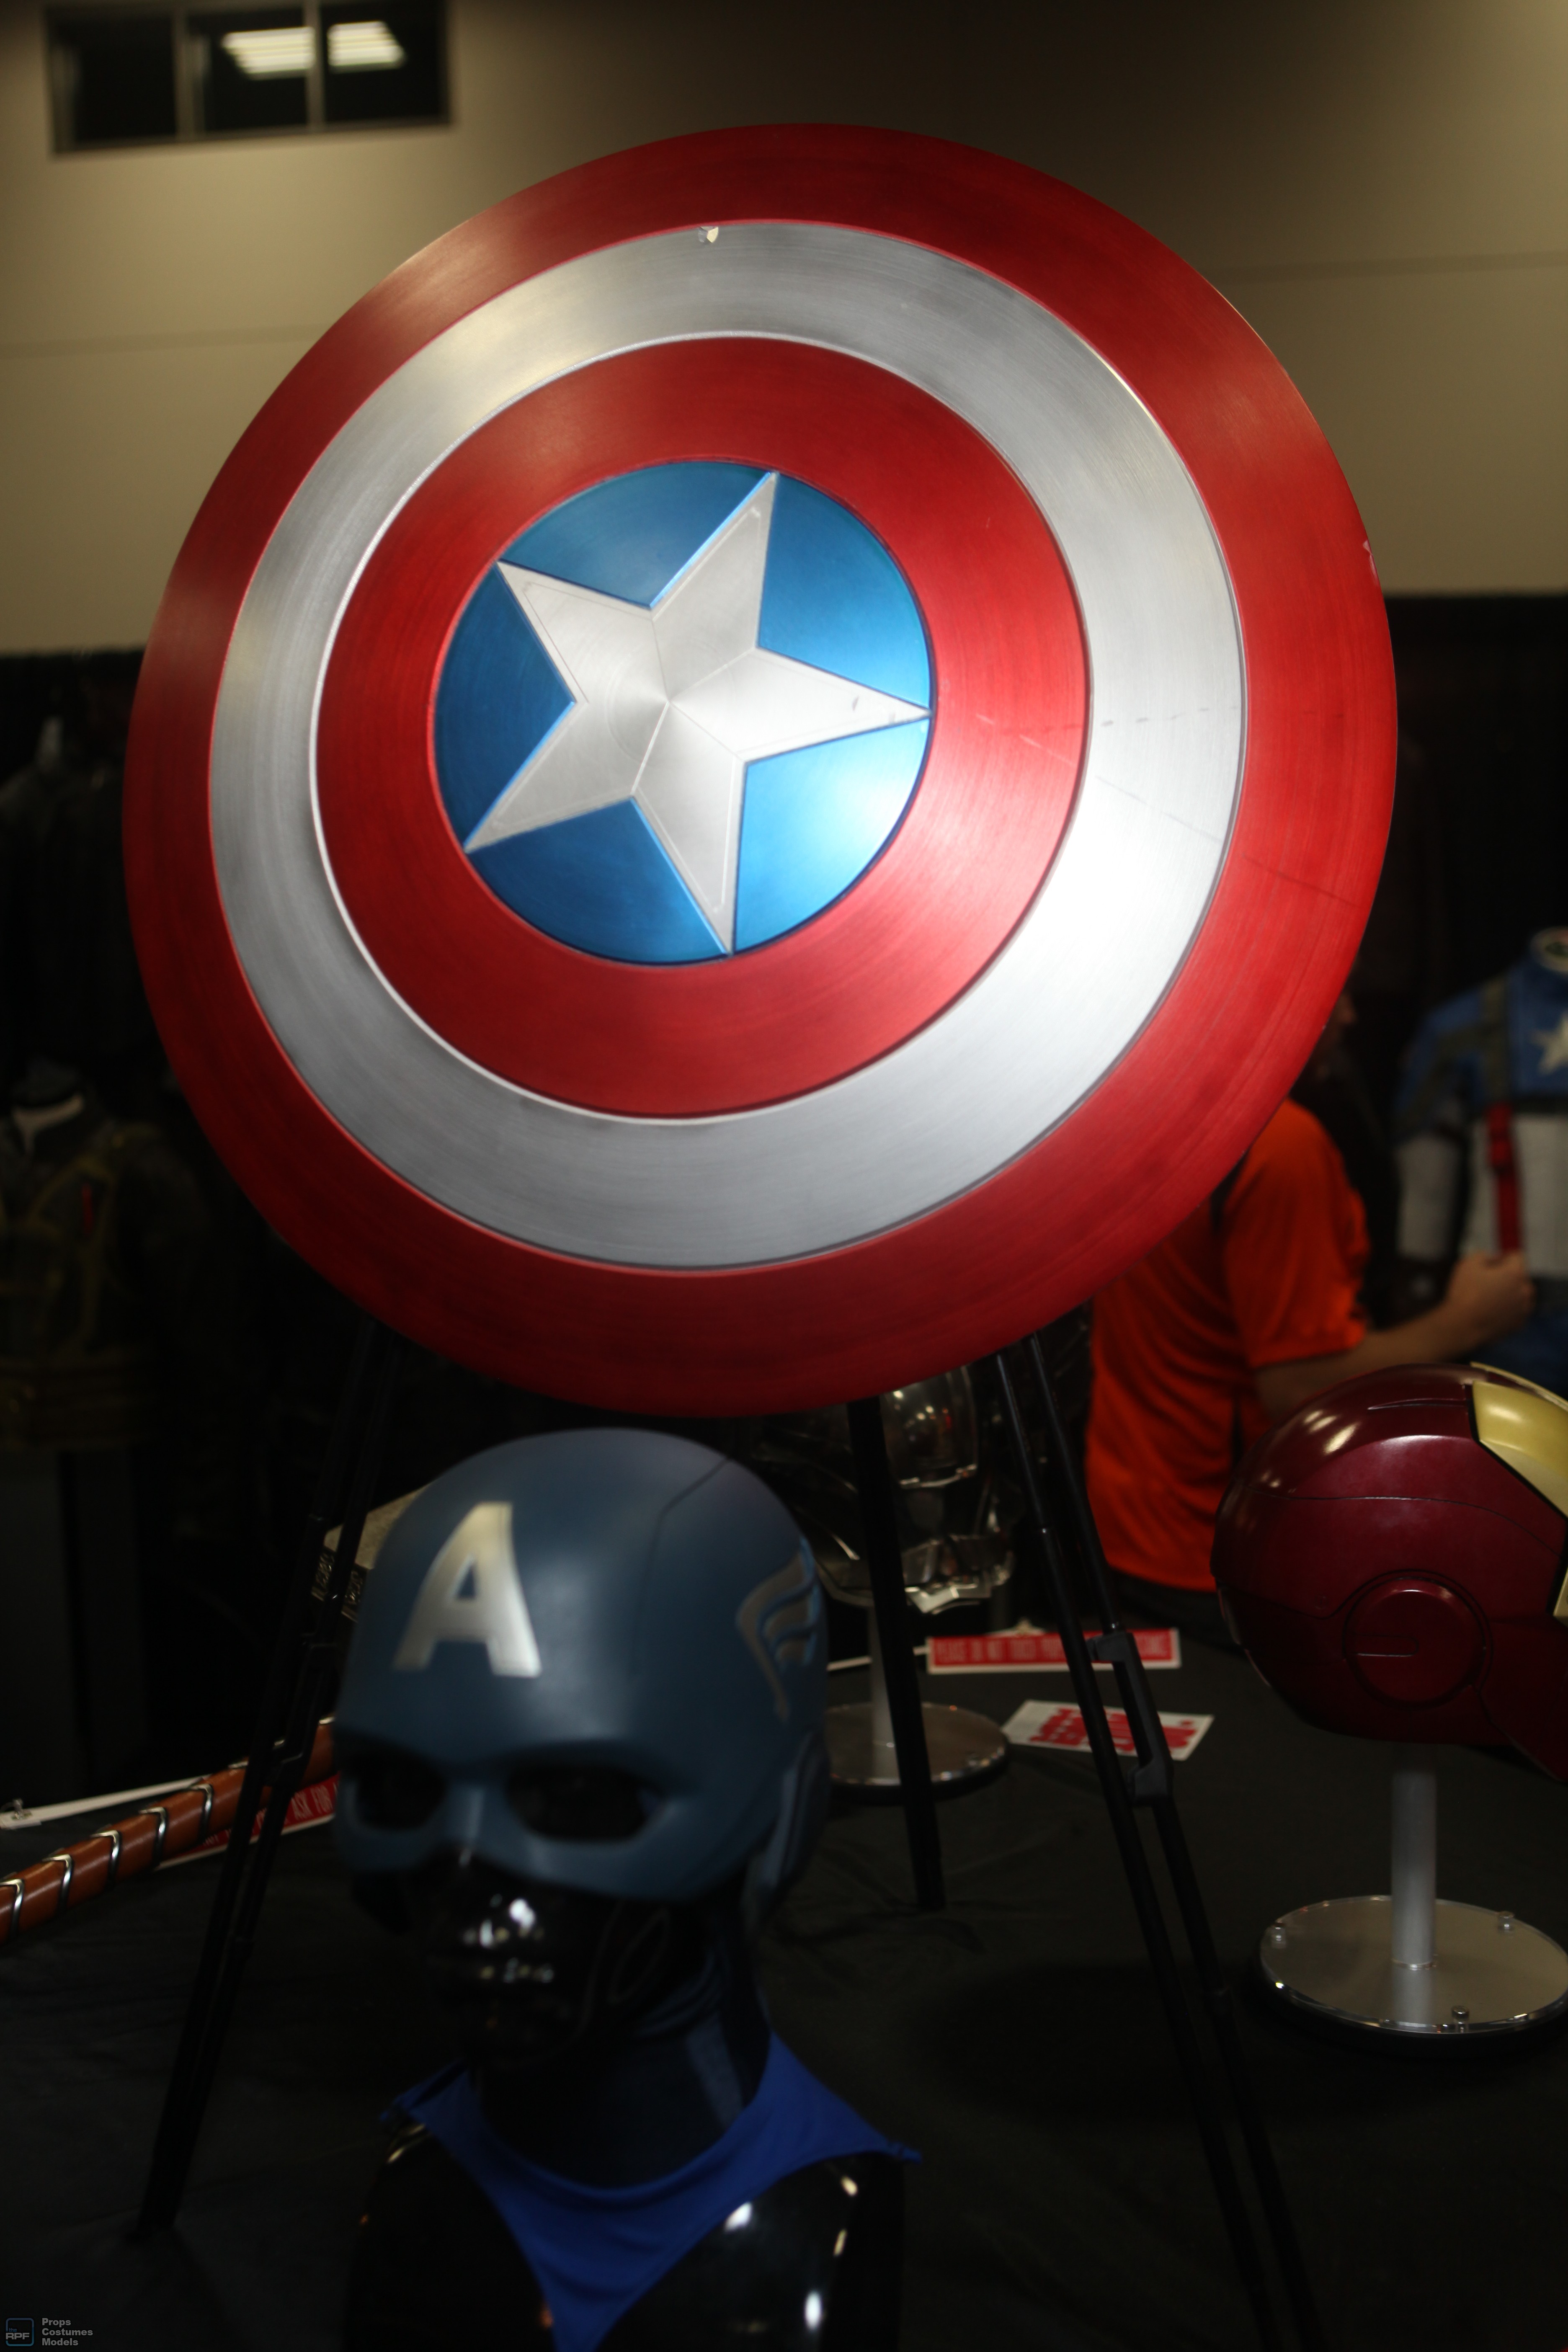 eFX Collectibles - Marvel Captain America shield